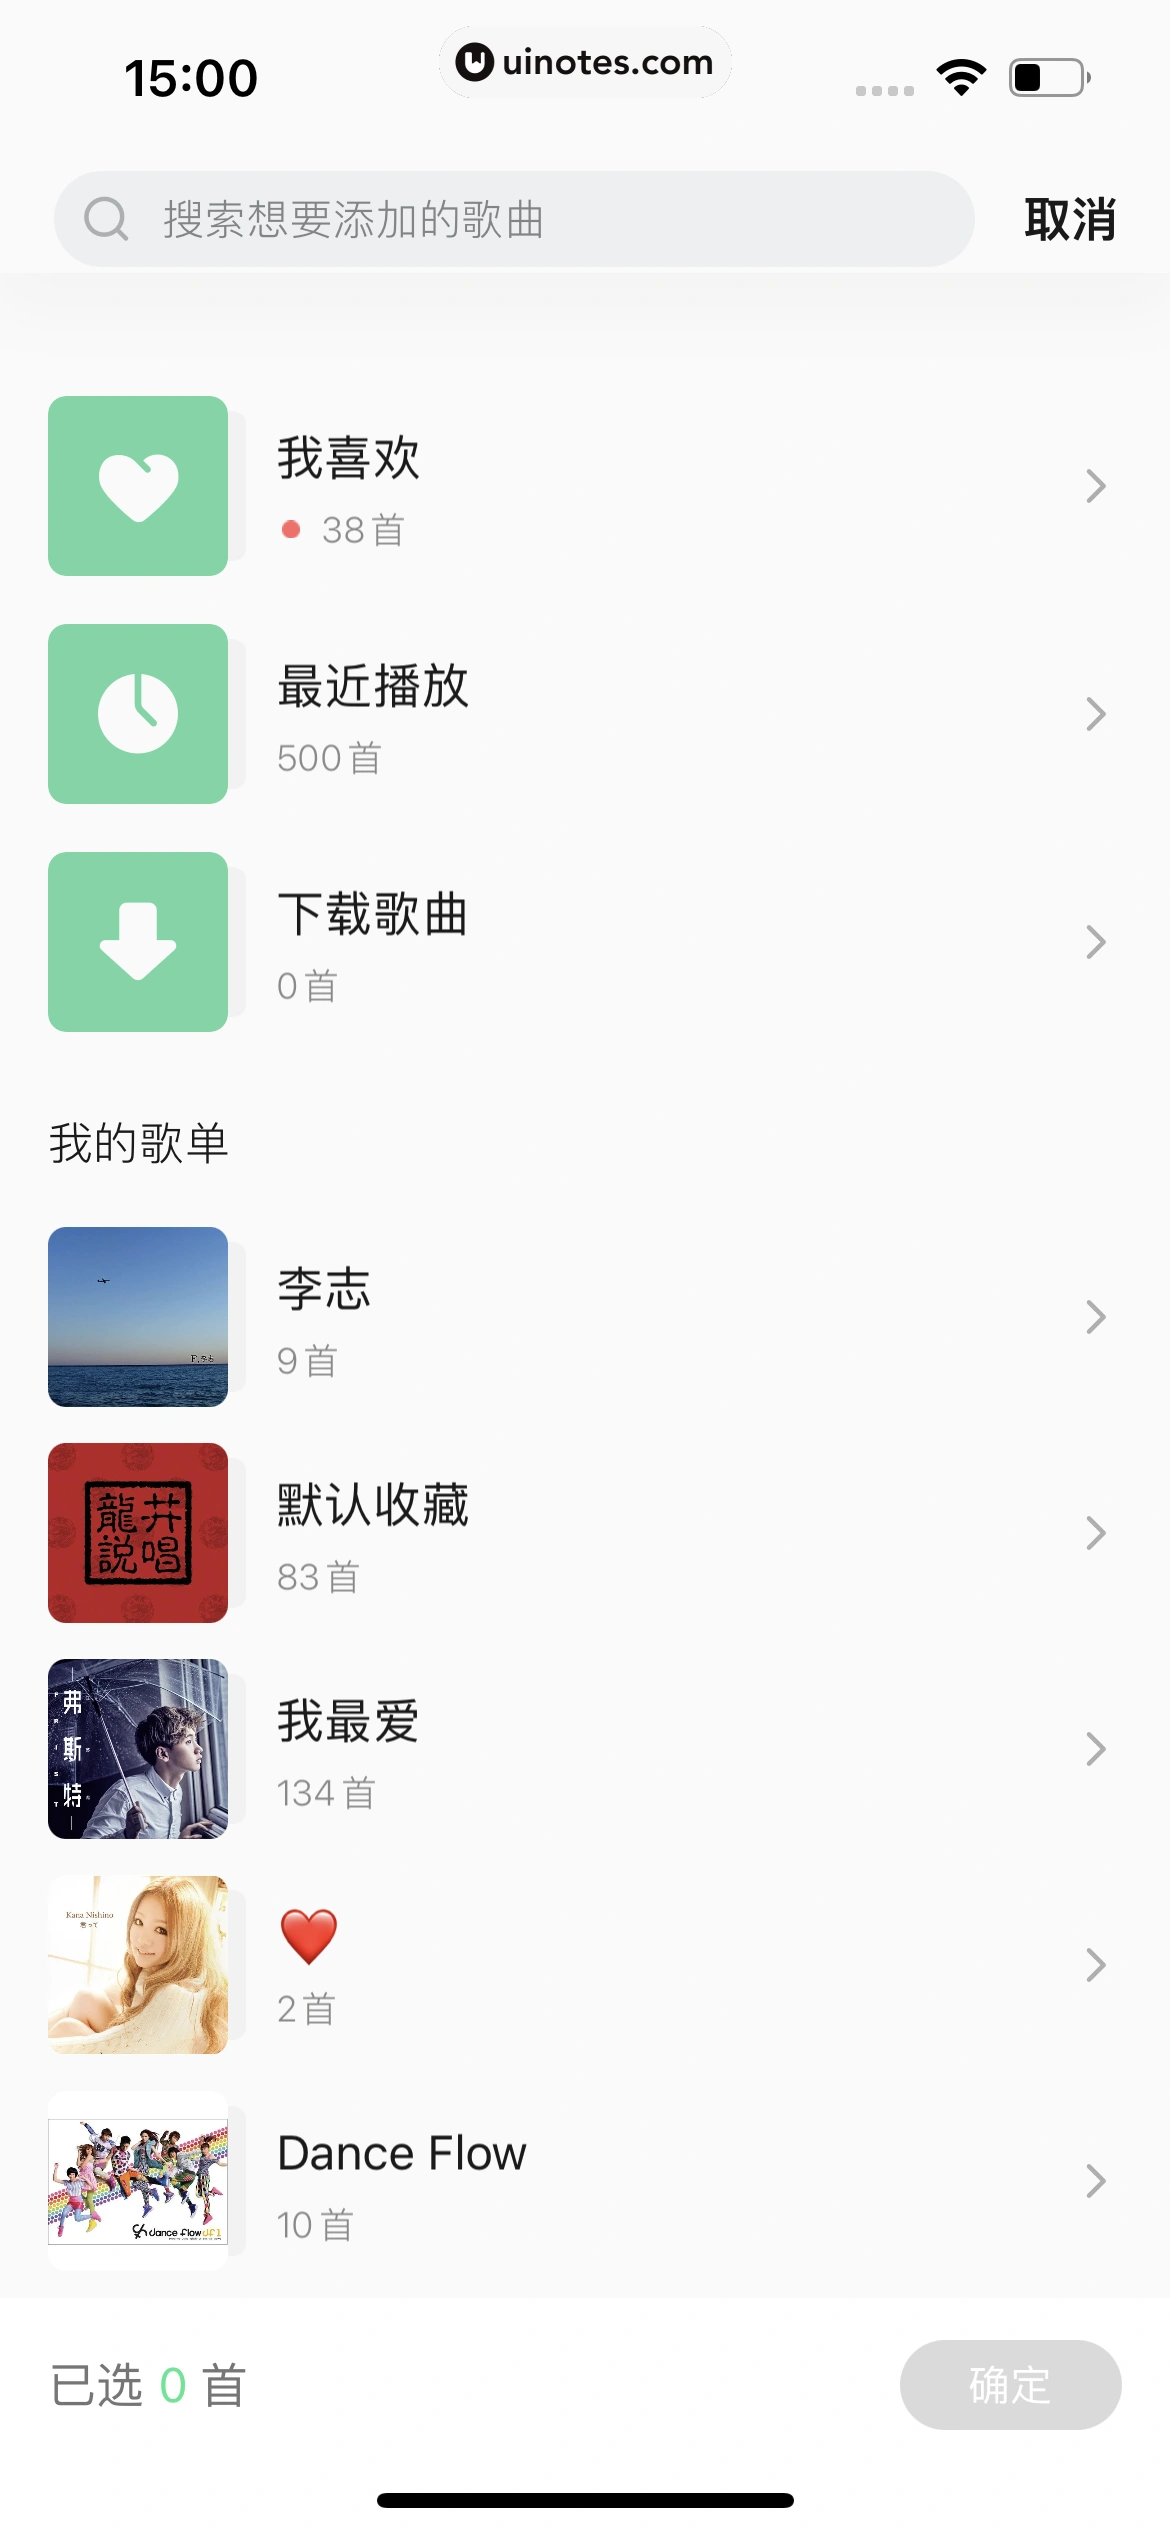 QQ音乐 App 截图 271 - UI Notes